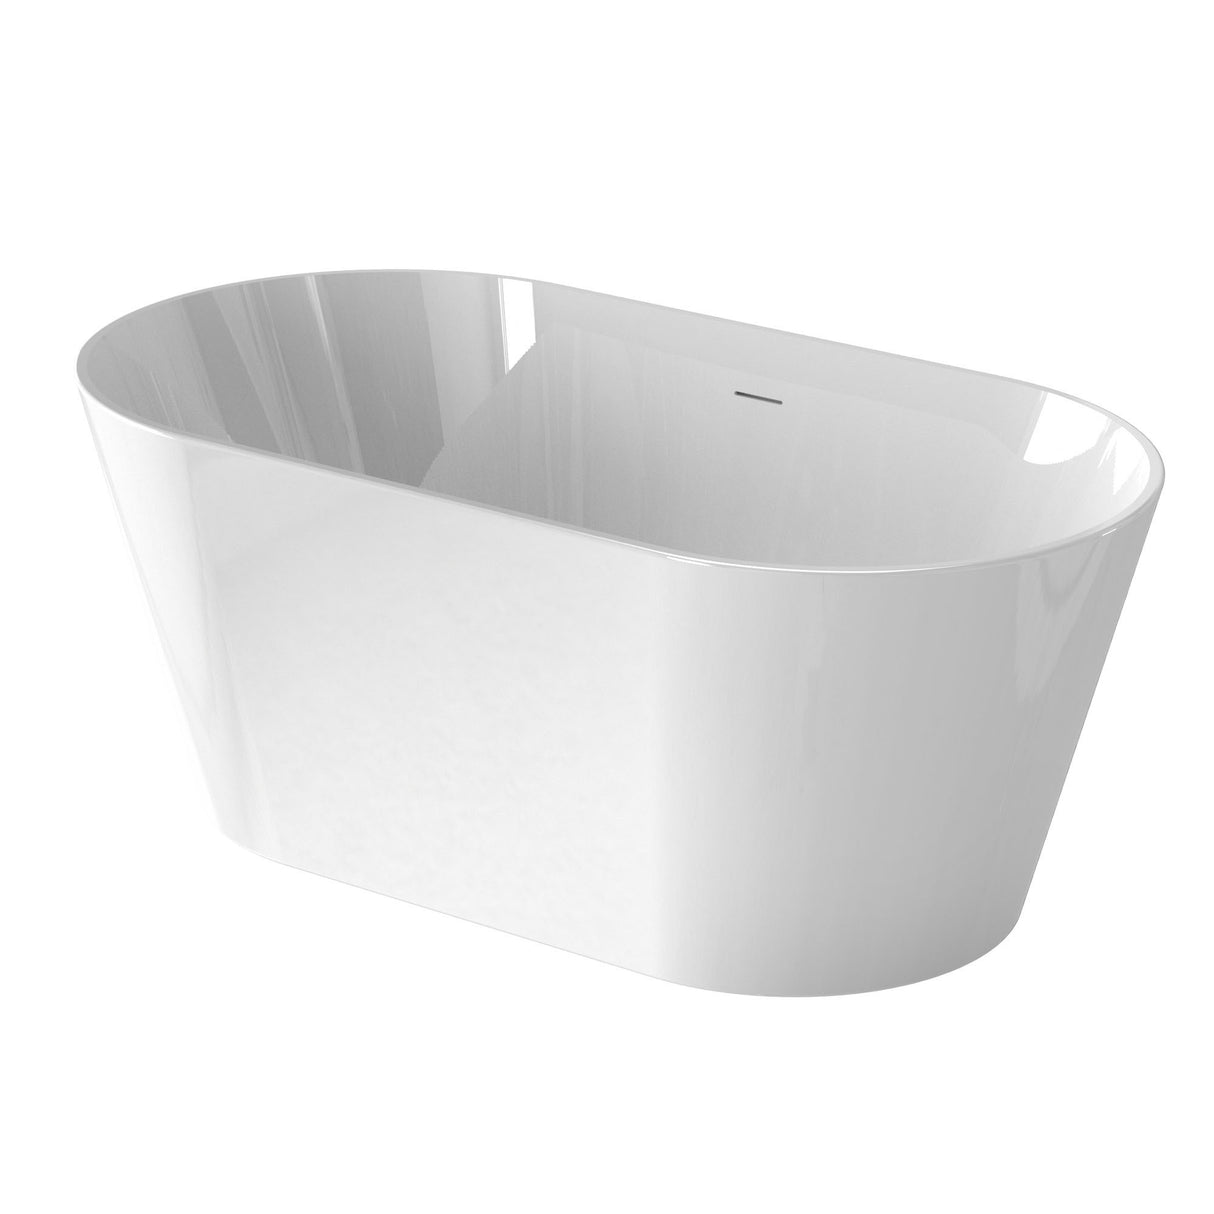 Acrylic Freestanding Soaking Bathtub-54‘’-white